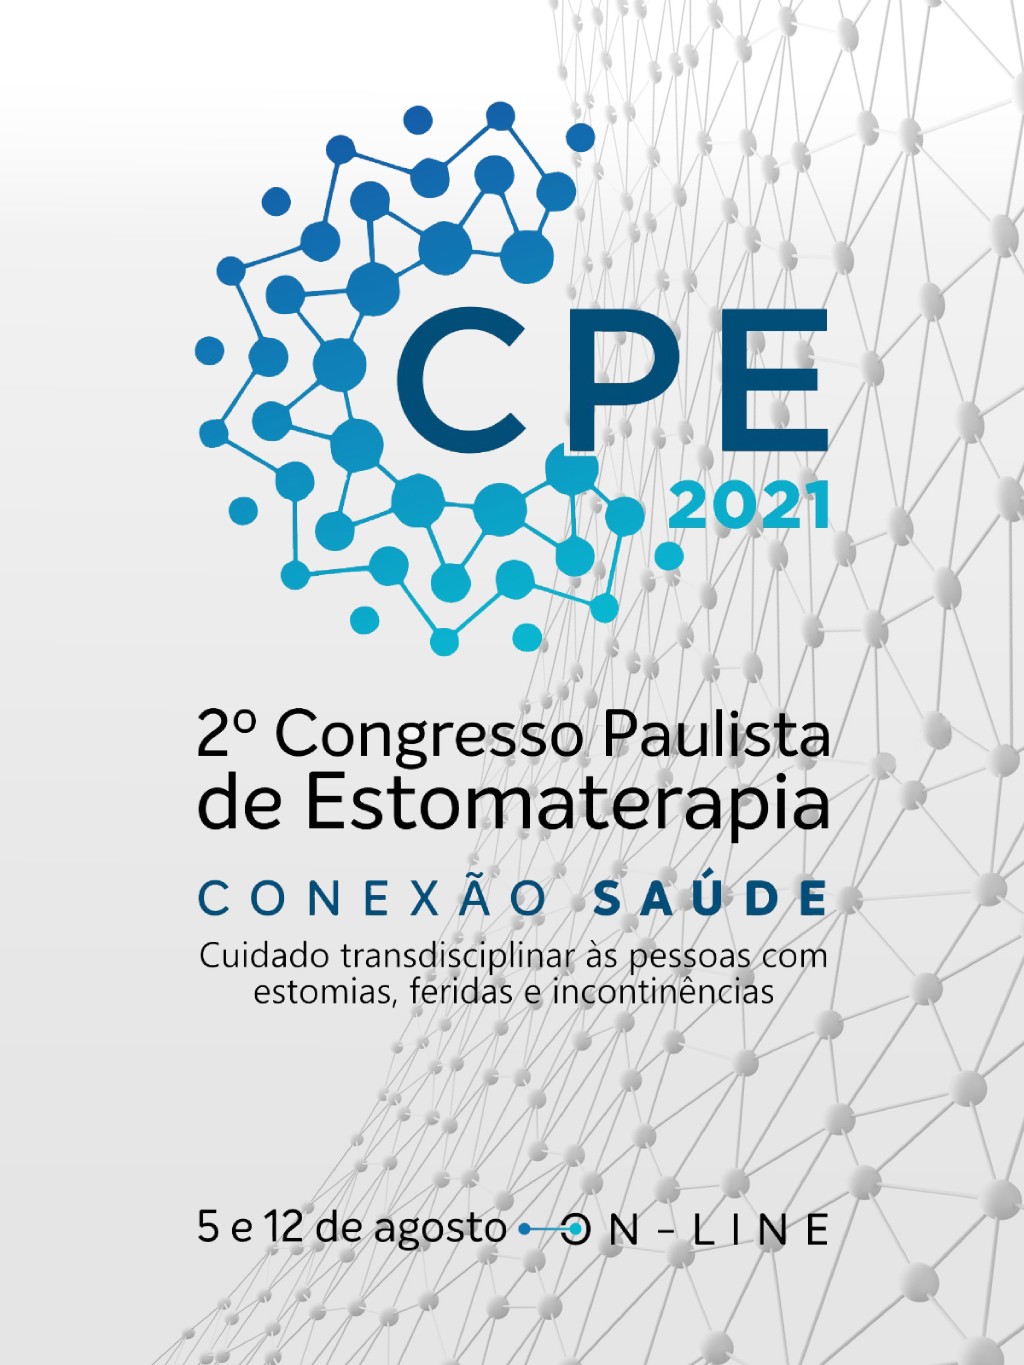 					Ver 2021: Congresso Paulista de Estomaterapia
				